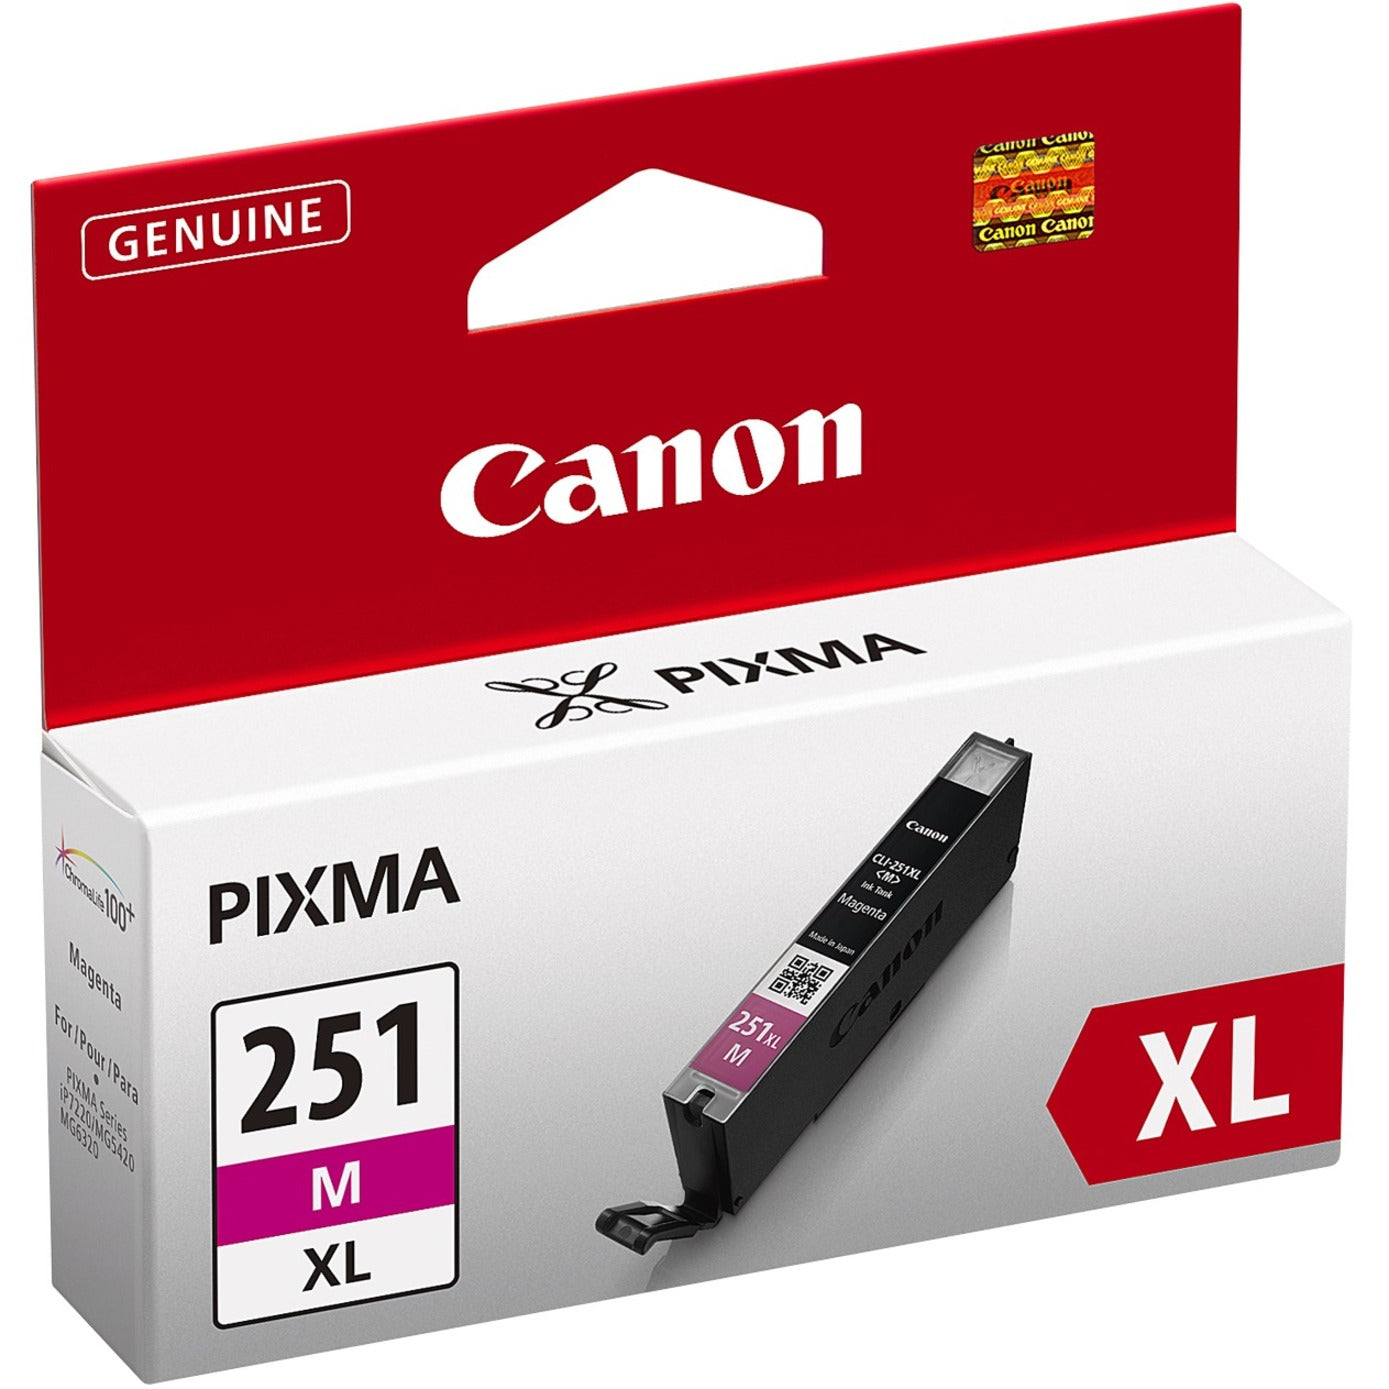 Canon 6450B001 CLI-251XL Magenta Ink Cartridge, High Yield, ChromaLife100+